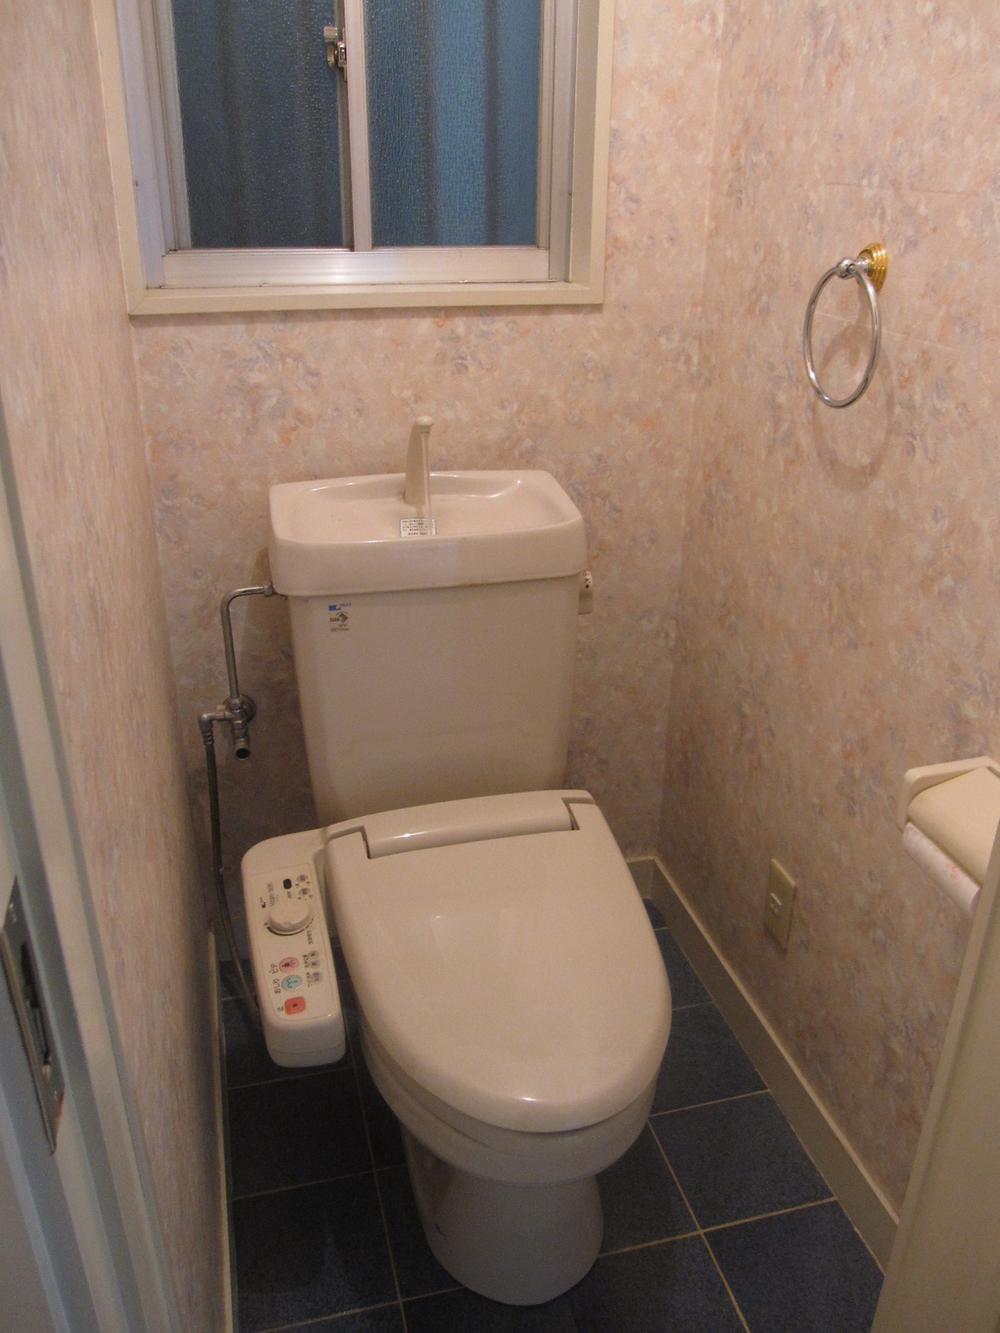 Toilet. With window, Toilet with hot toilet seat